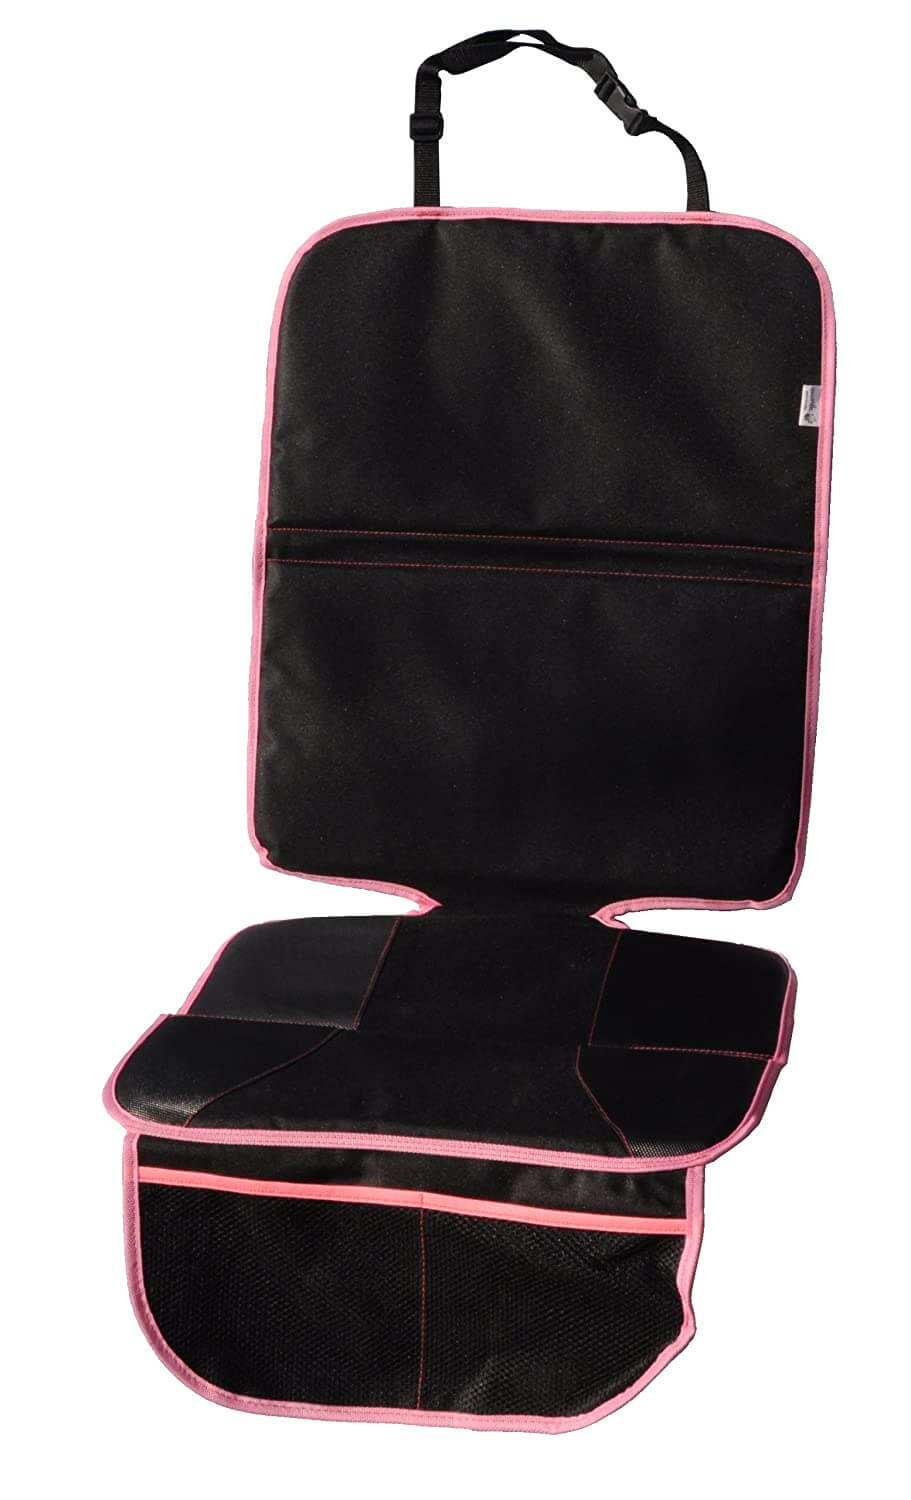 https://www.norma24.de/media/image/4c/56/3f/1135134-Wumbi-Sitzschutz-pink-Schutz-Isofix-Wumbi-Sitzschutz-Pink-Sitzbezug-Kindersitzunterlage-Wasserabweisend-Sitzschoner-Isofix-Rutschfest.jpg